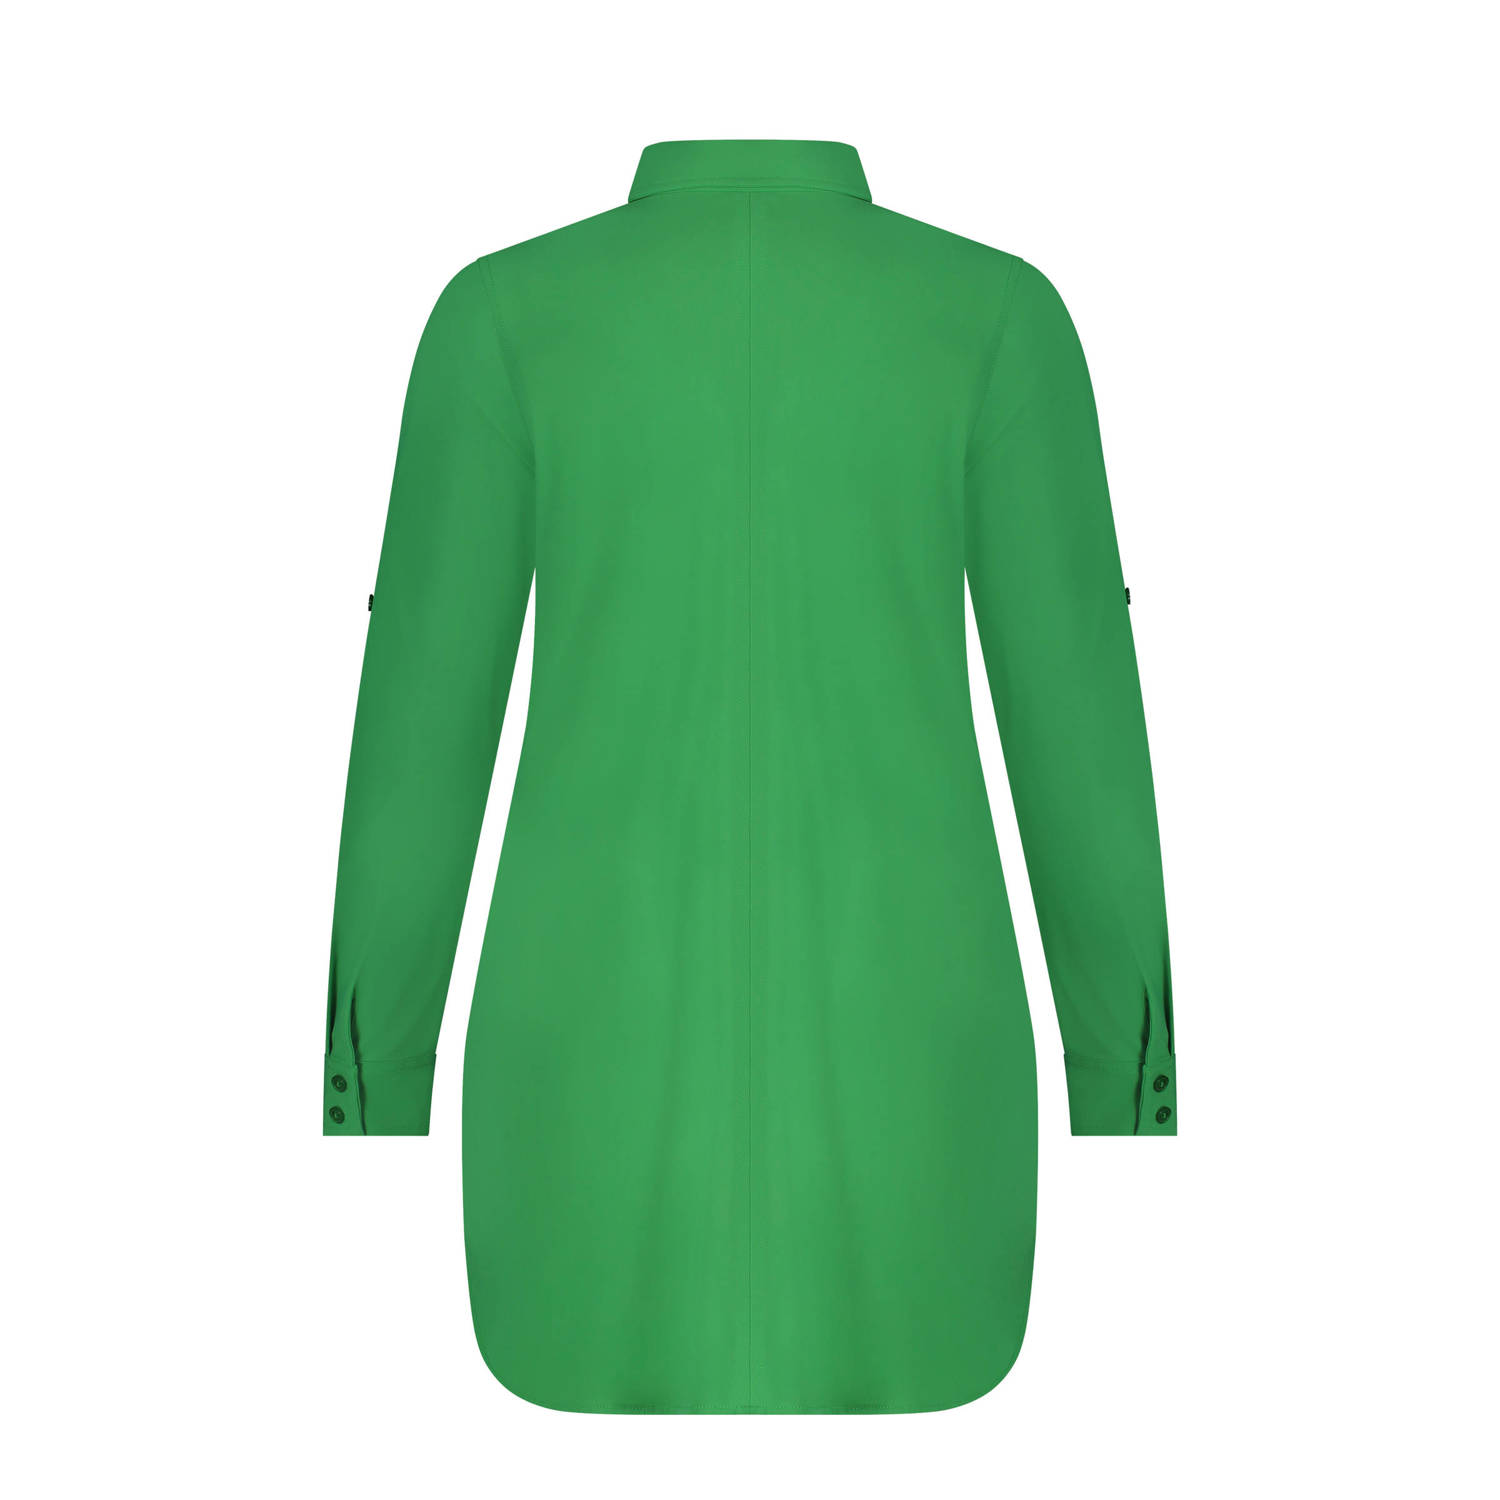 Plus Basics blouse van travelstof groen